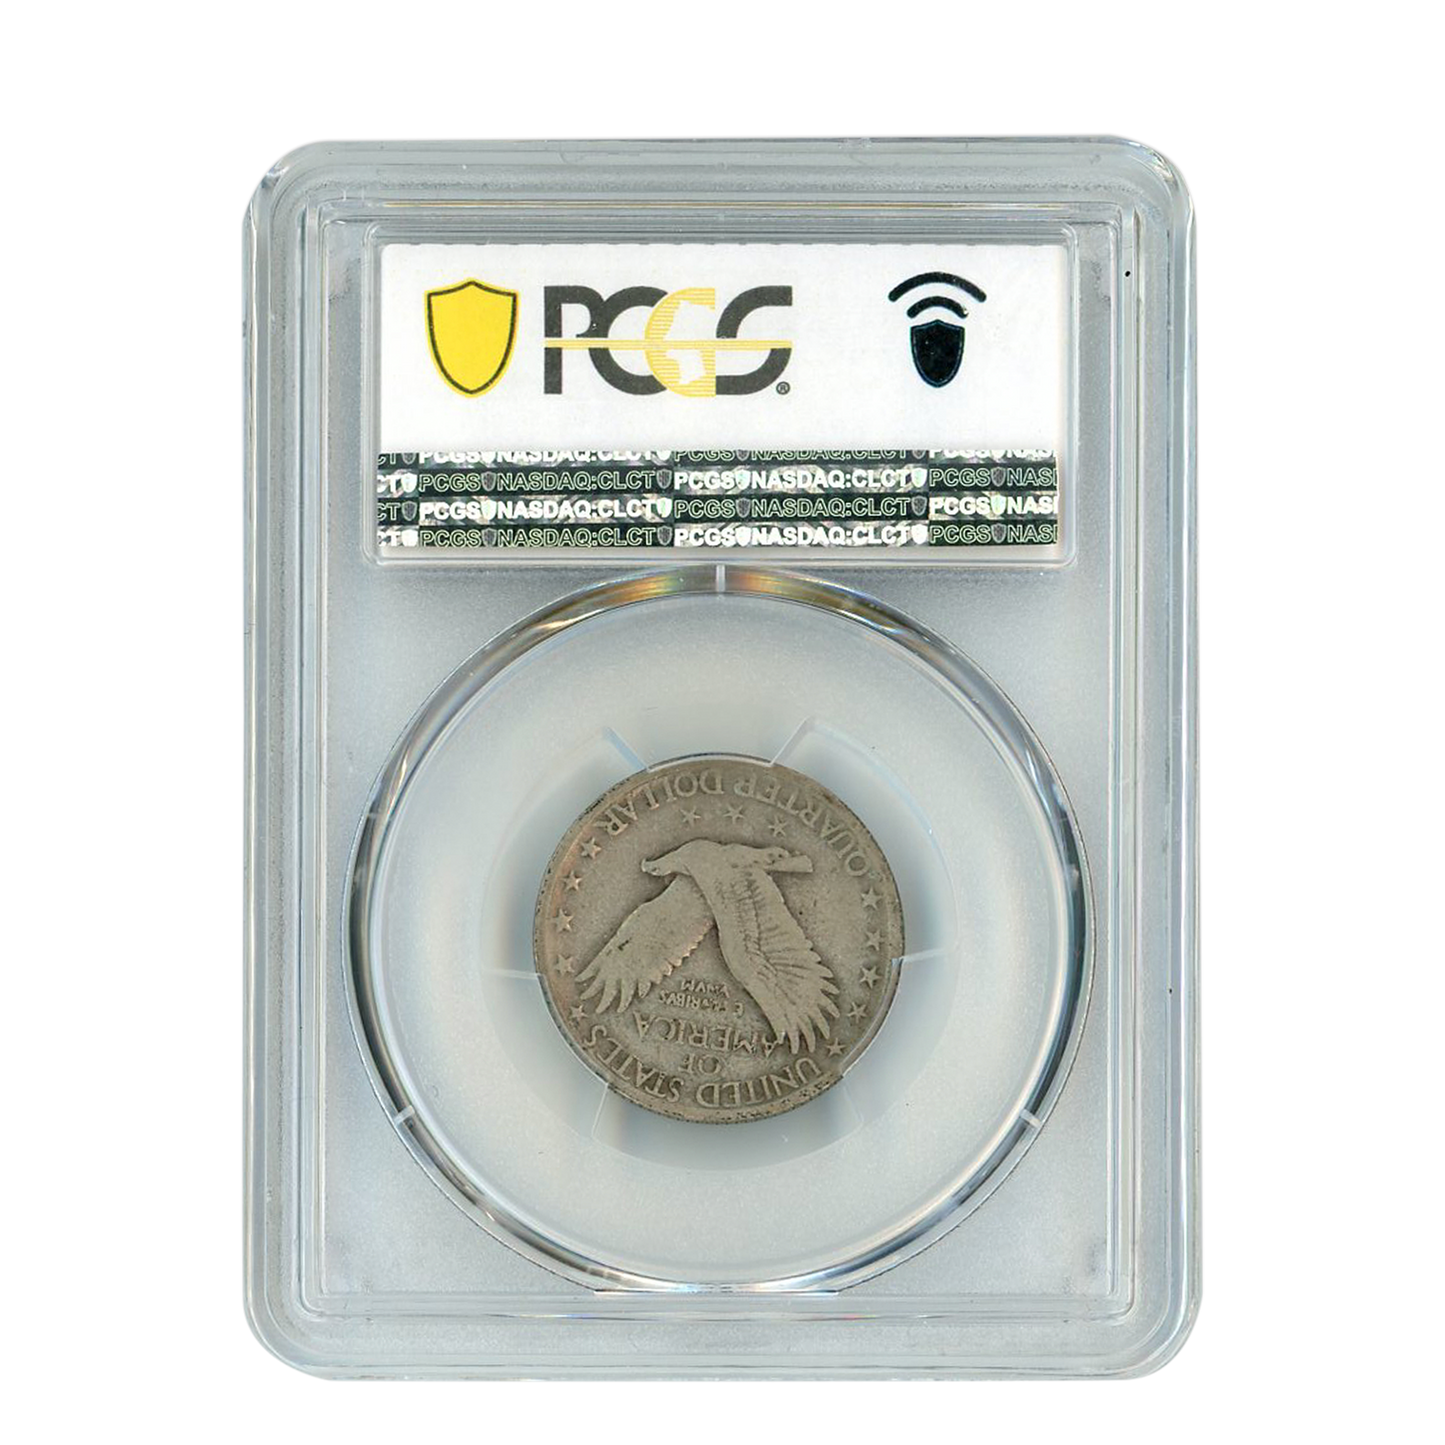 1921 Standing Liberty Quarter Dollar - PCGS G06